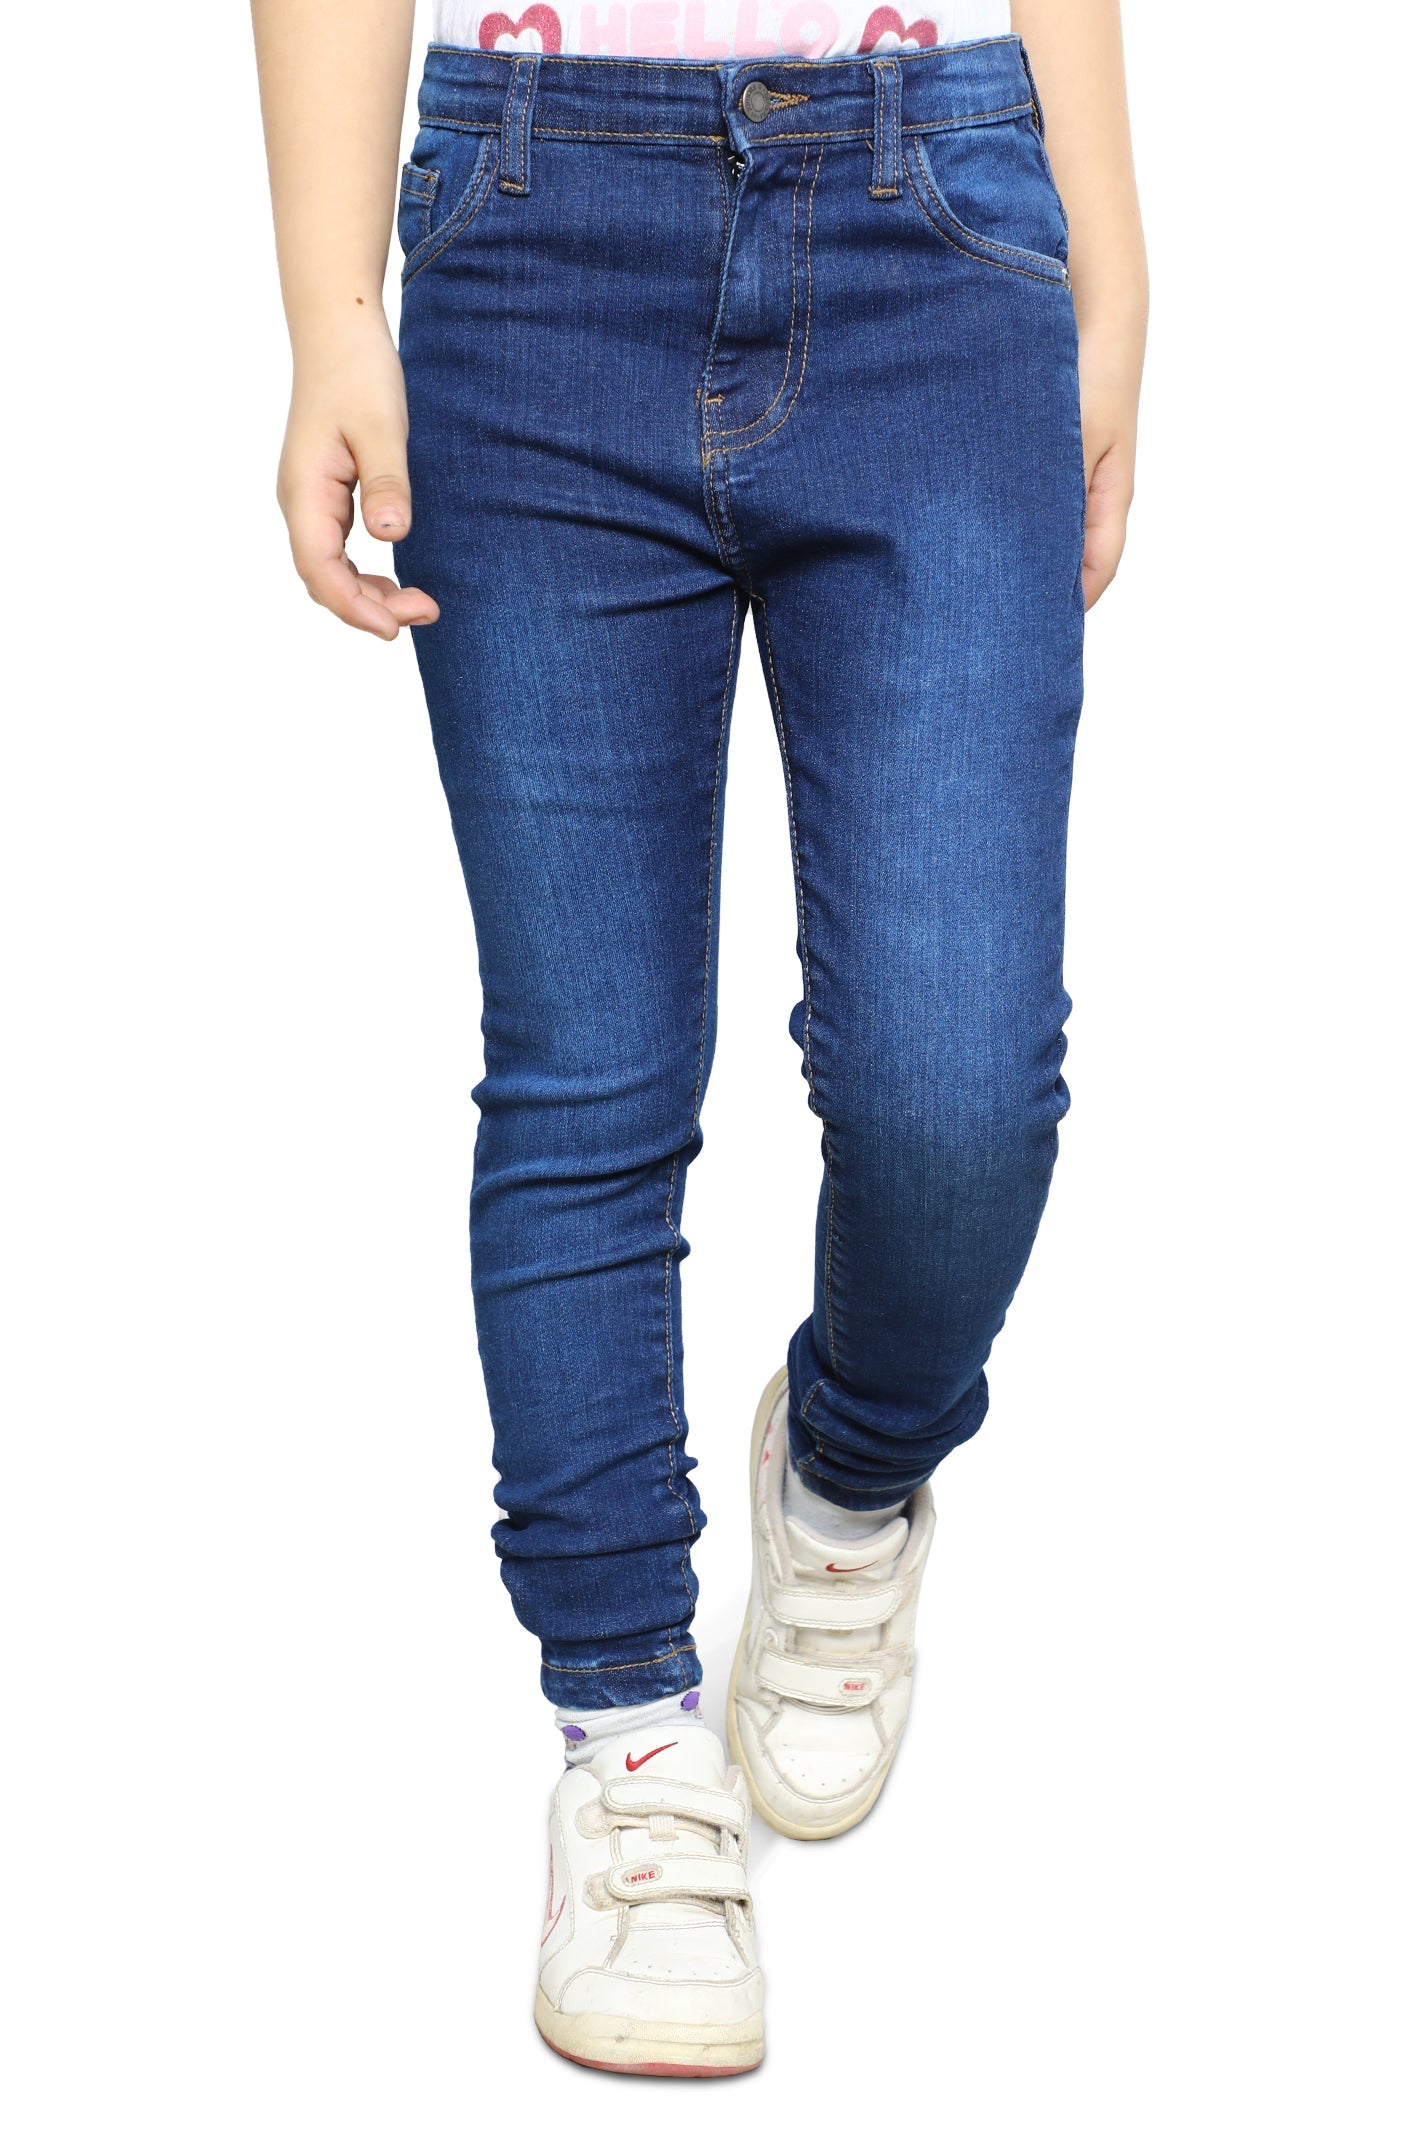 Trouser For Girls SKU: KGC-0243-BLUE - Diners